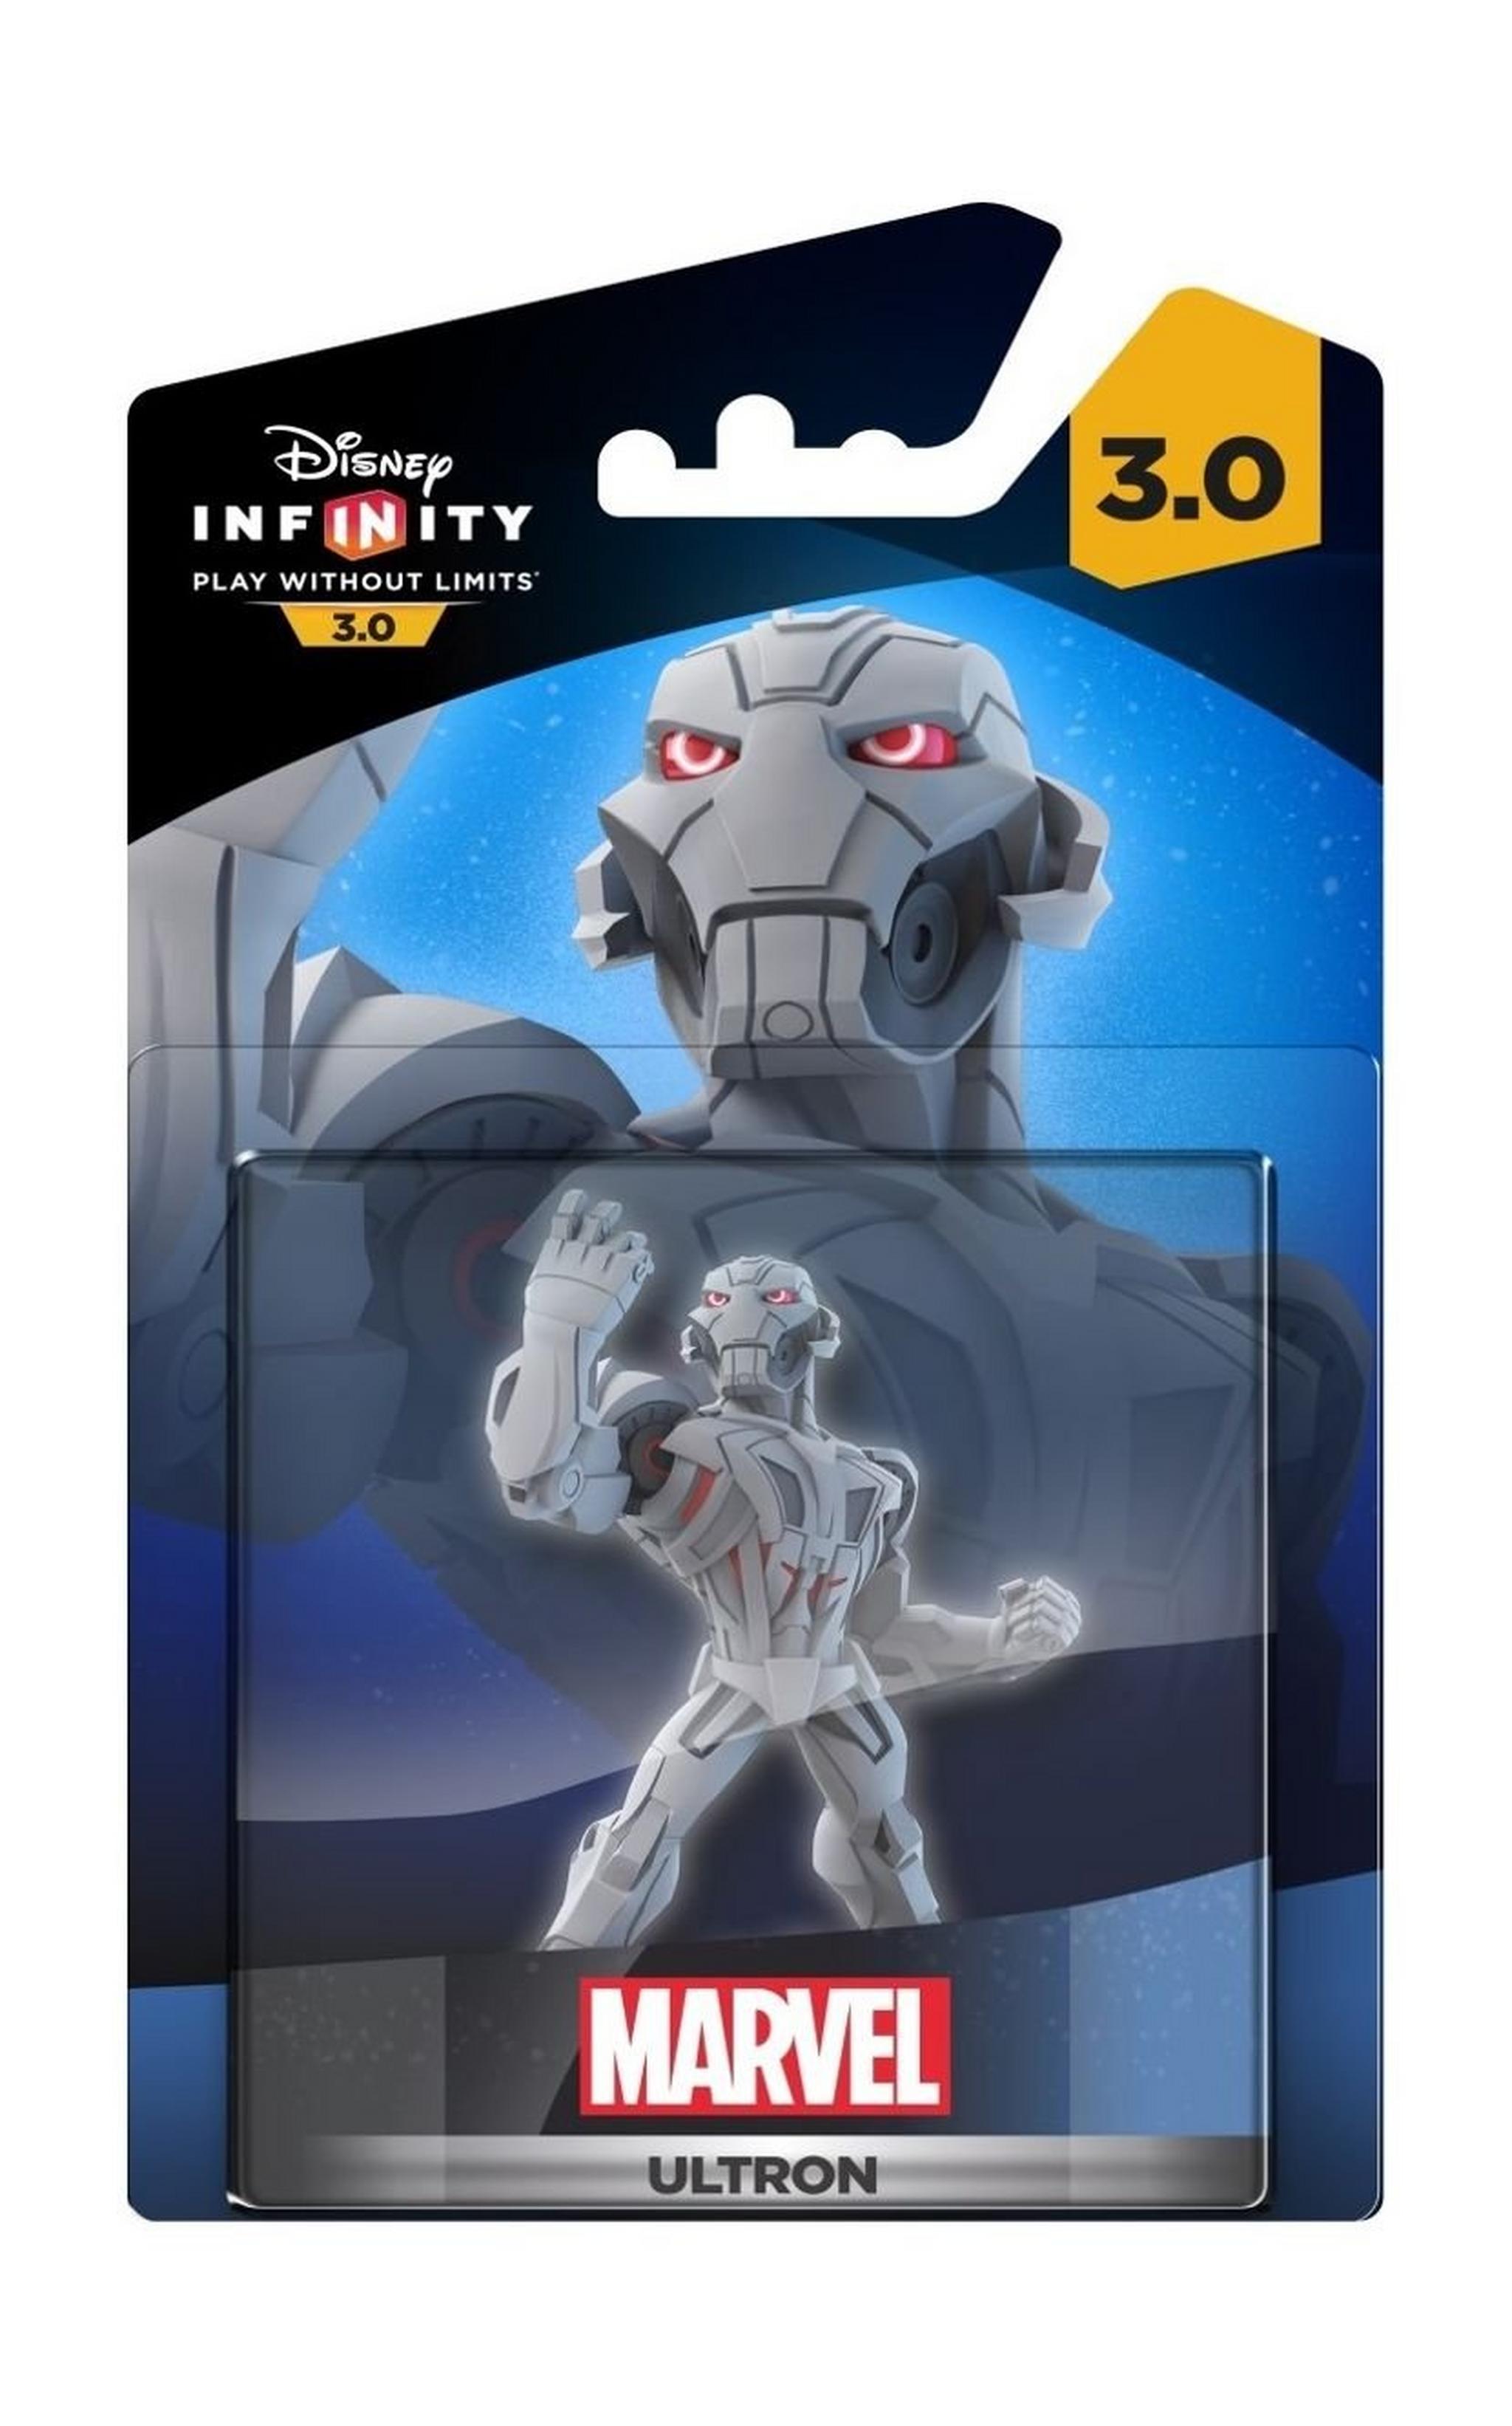 Disney Infinity 3.0 Edition: Ultron Figure